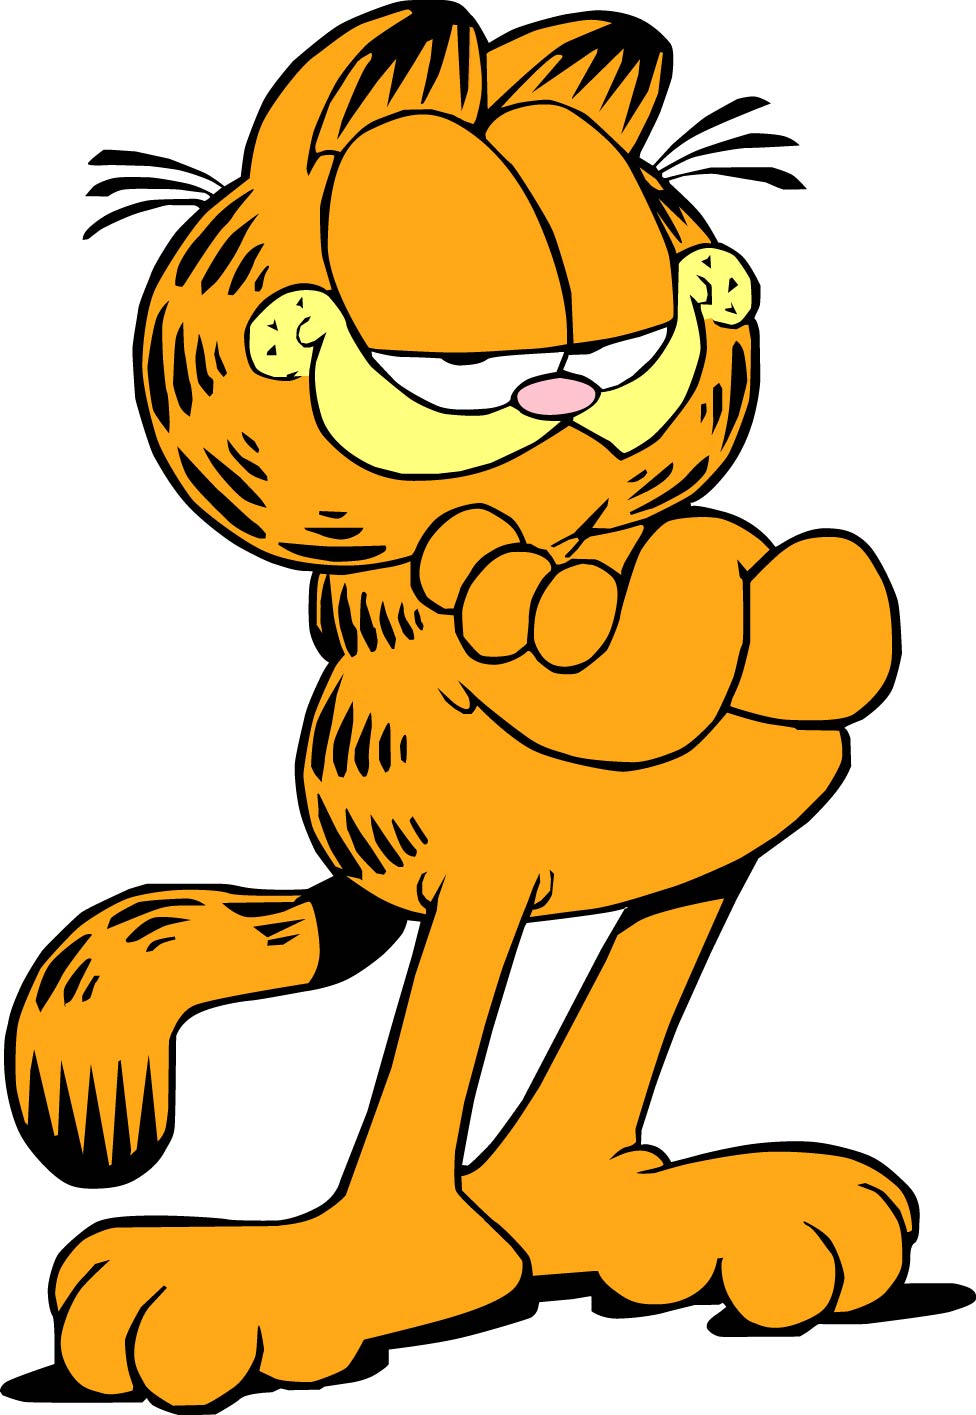 FREE Garfield Comics Daily